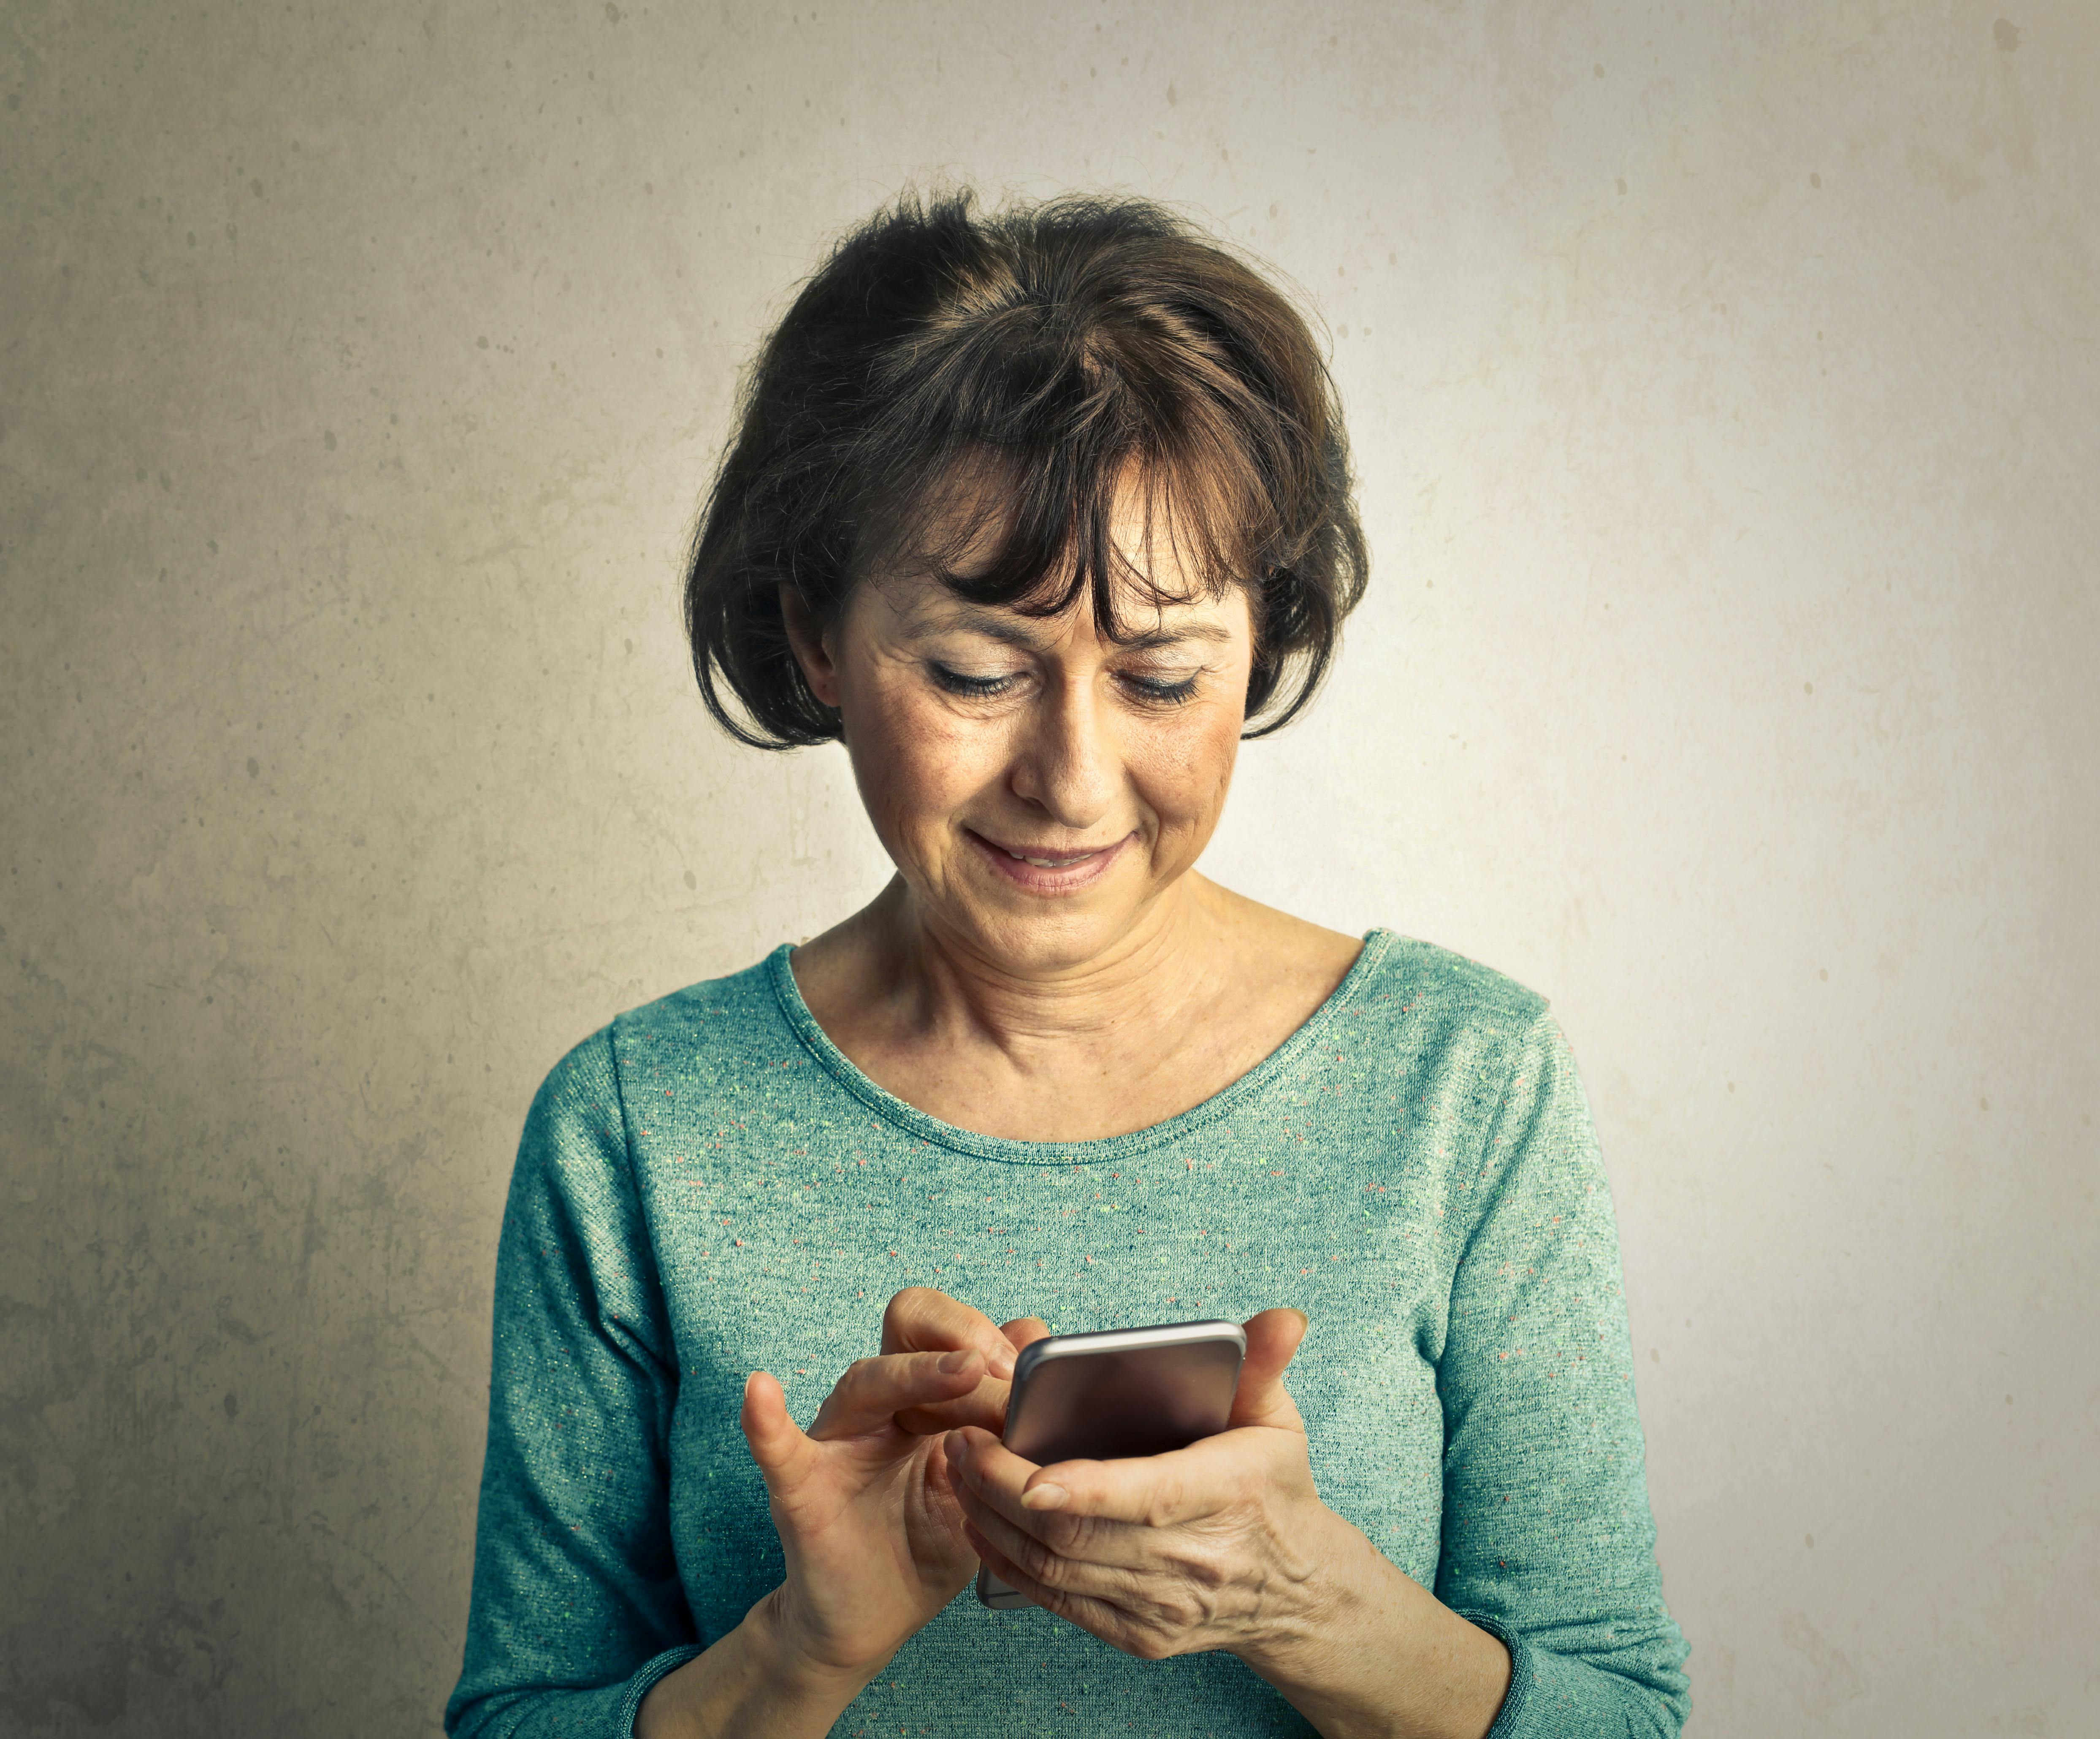 A senior woman texting | Source: Pexels